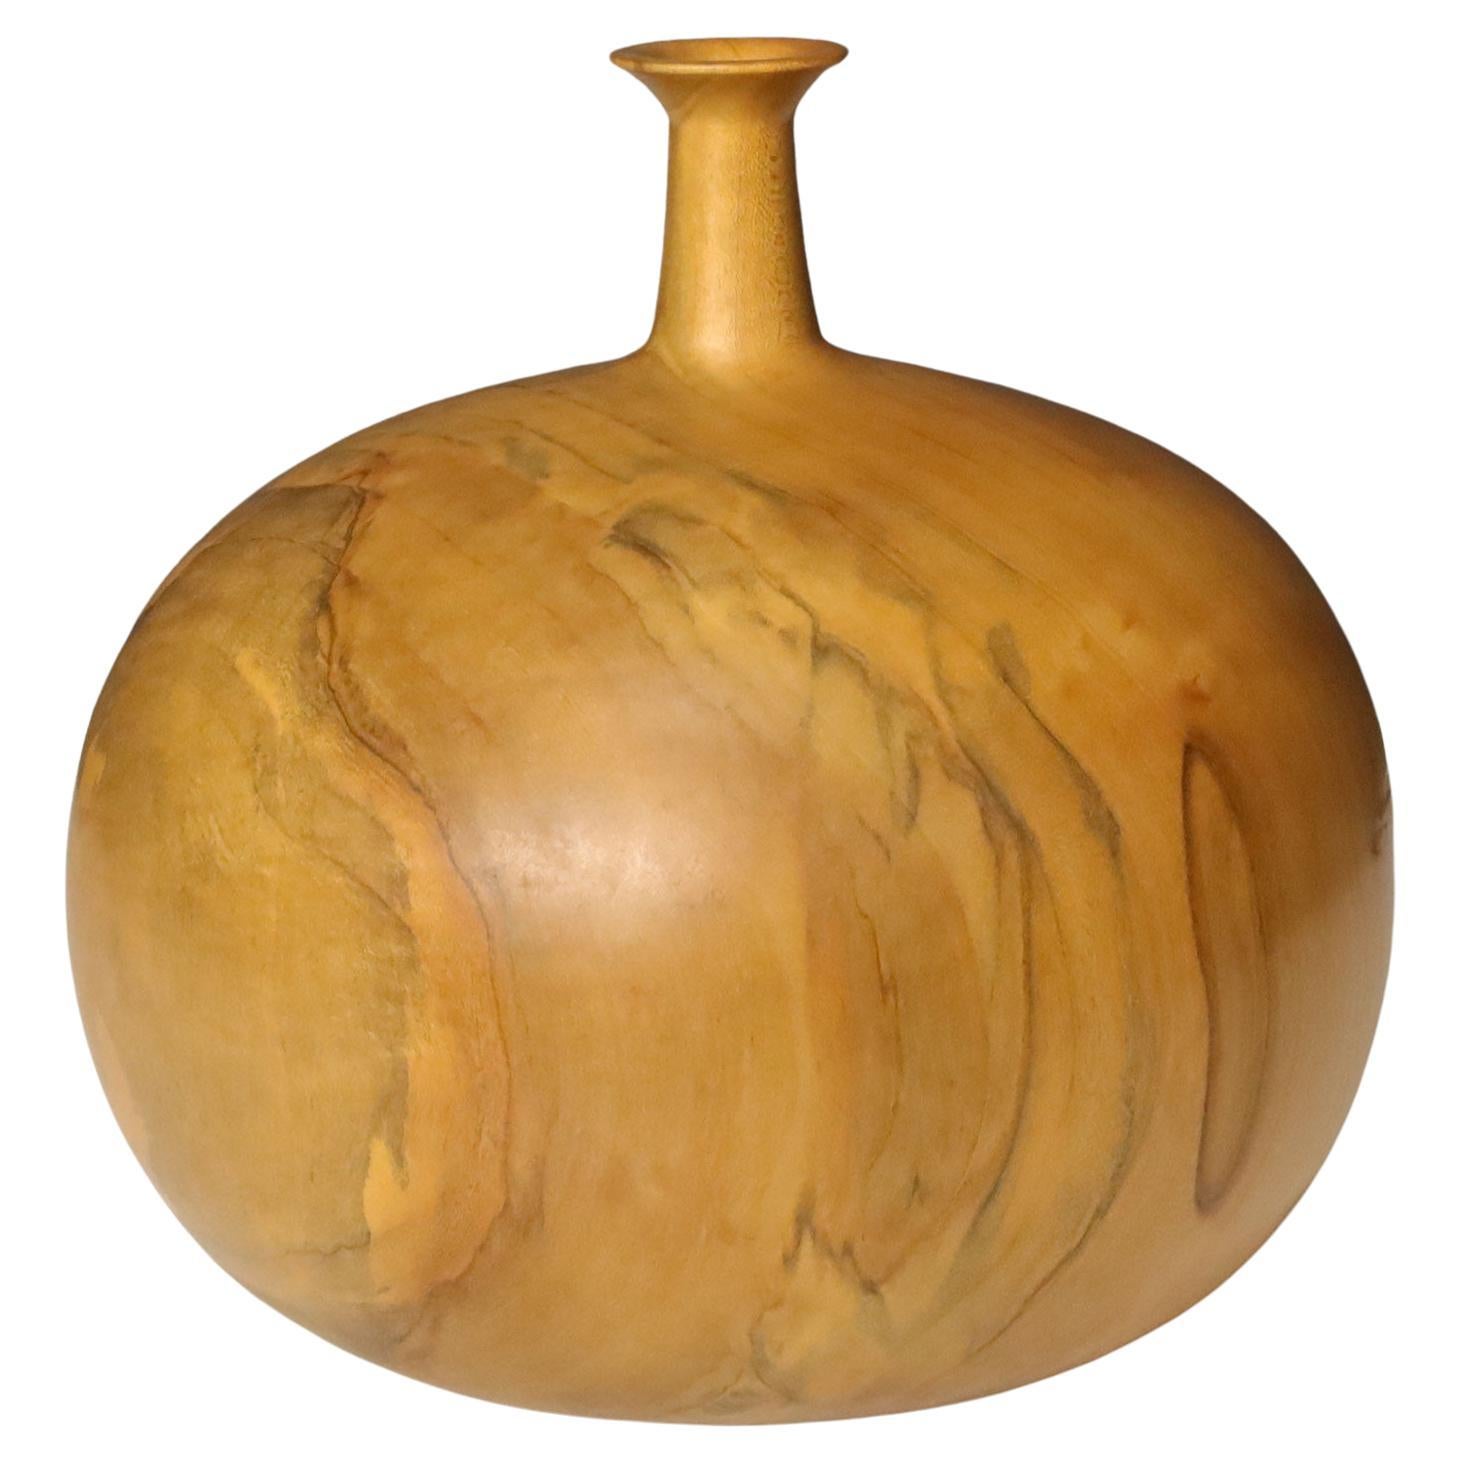 John Jordan Vase aus gedrehtem Ahorn